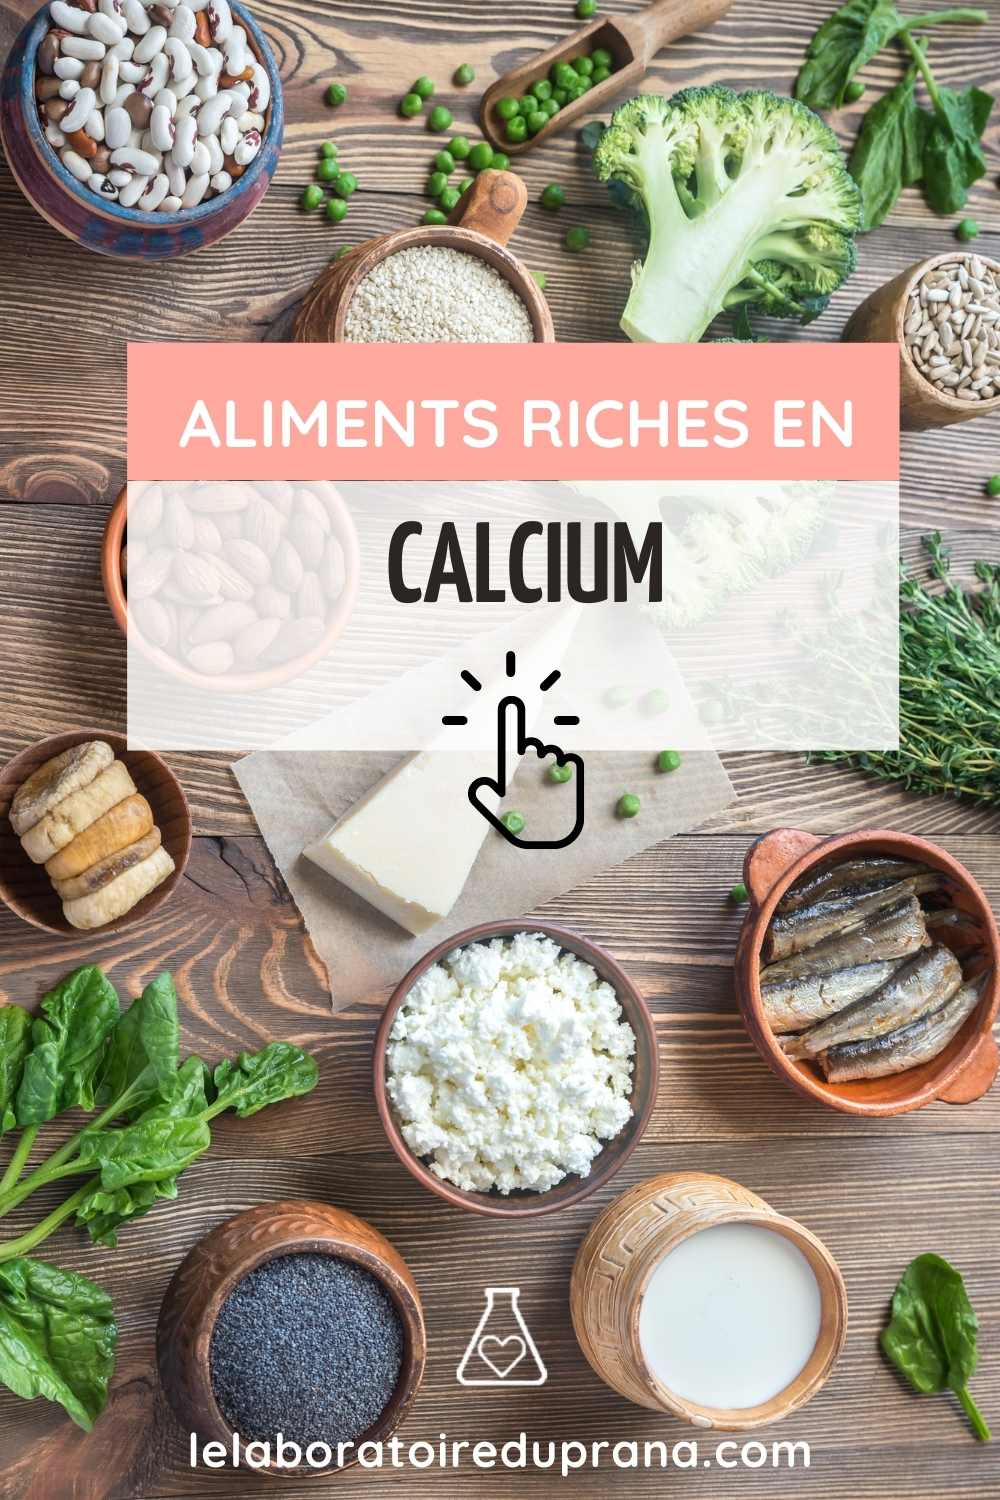 aaliments riches en calcium